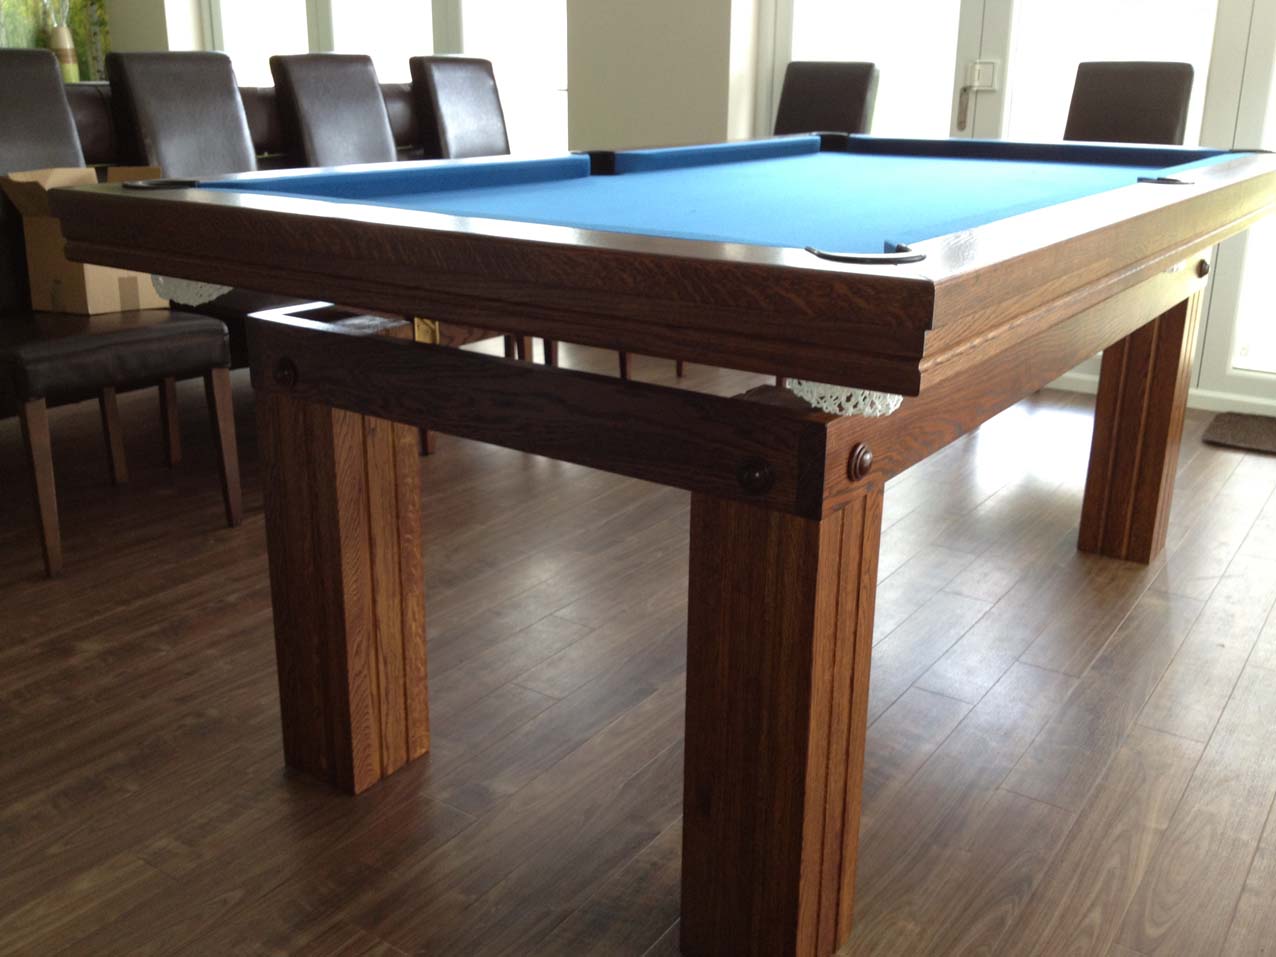 Pool Diner - 7ft in Oak / Blue - Snooker & Pool Table Company Ltd